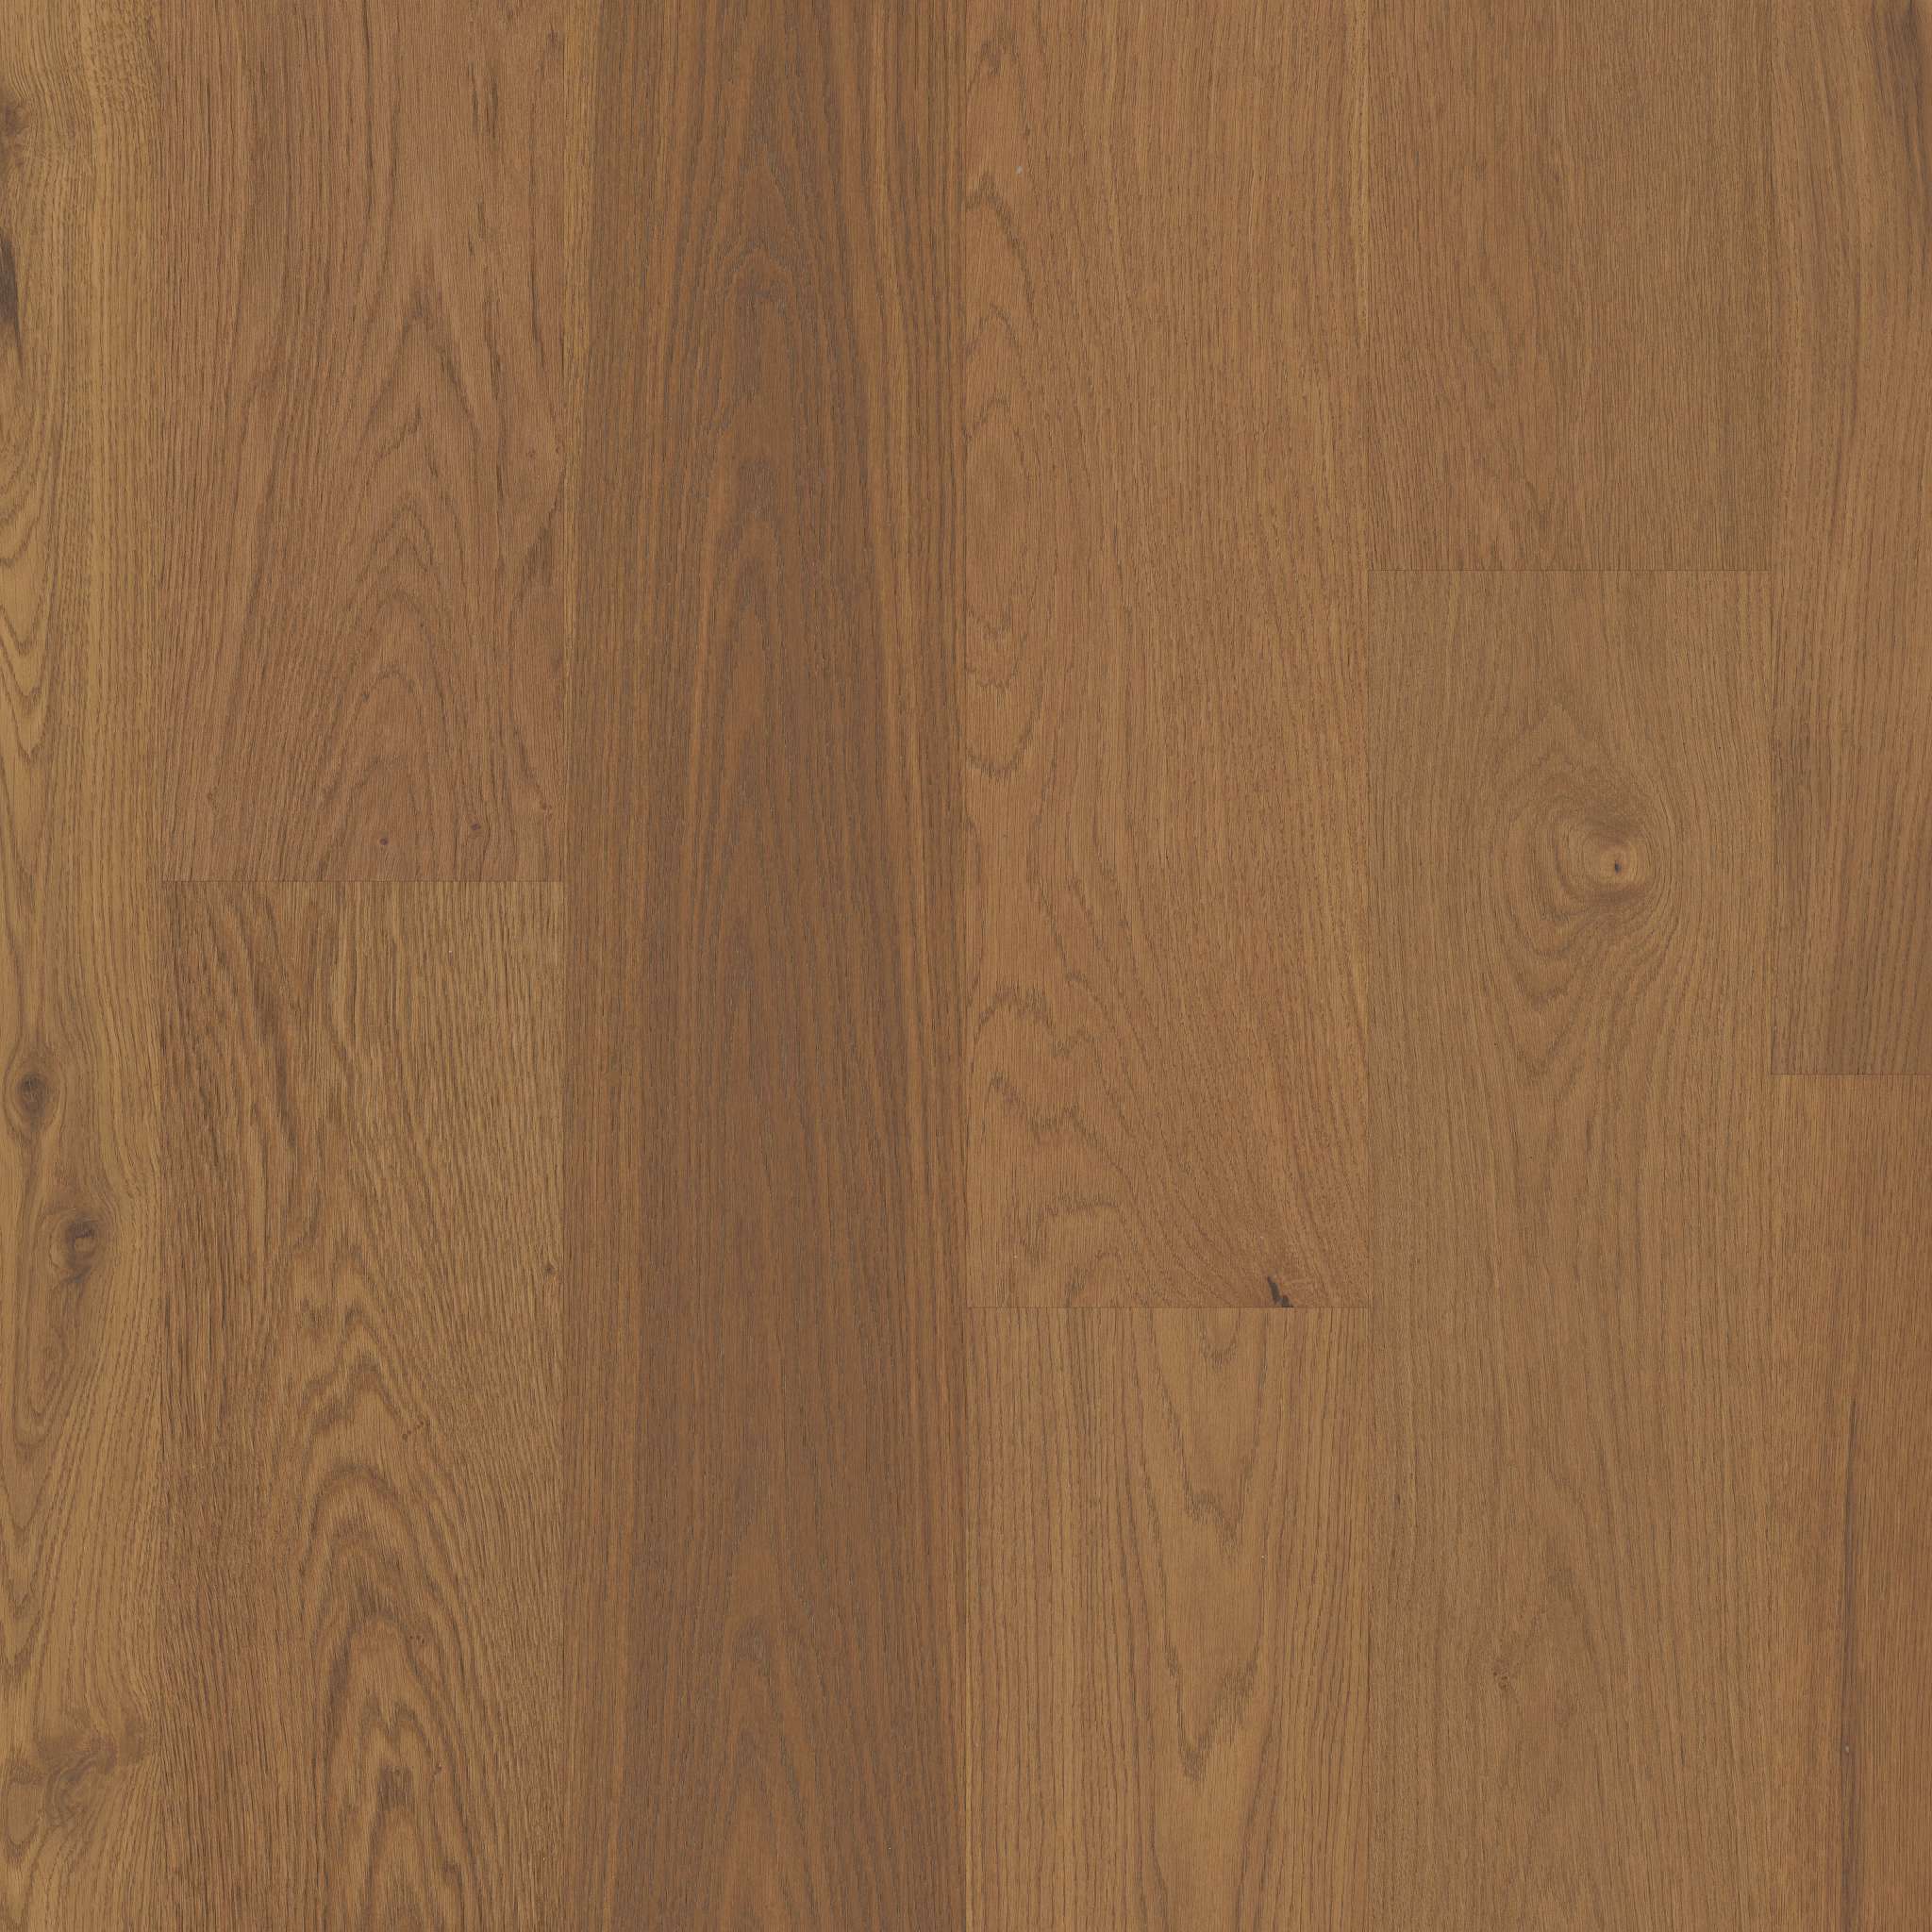 Exquisite Fh820 Warmed Oak Hardwoods, Shaw Floors Natures Element Laminate Flooring